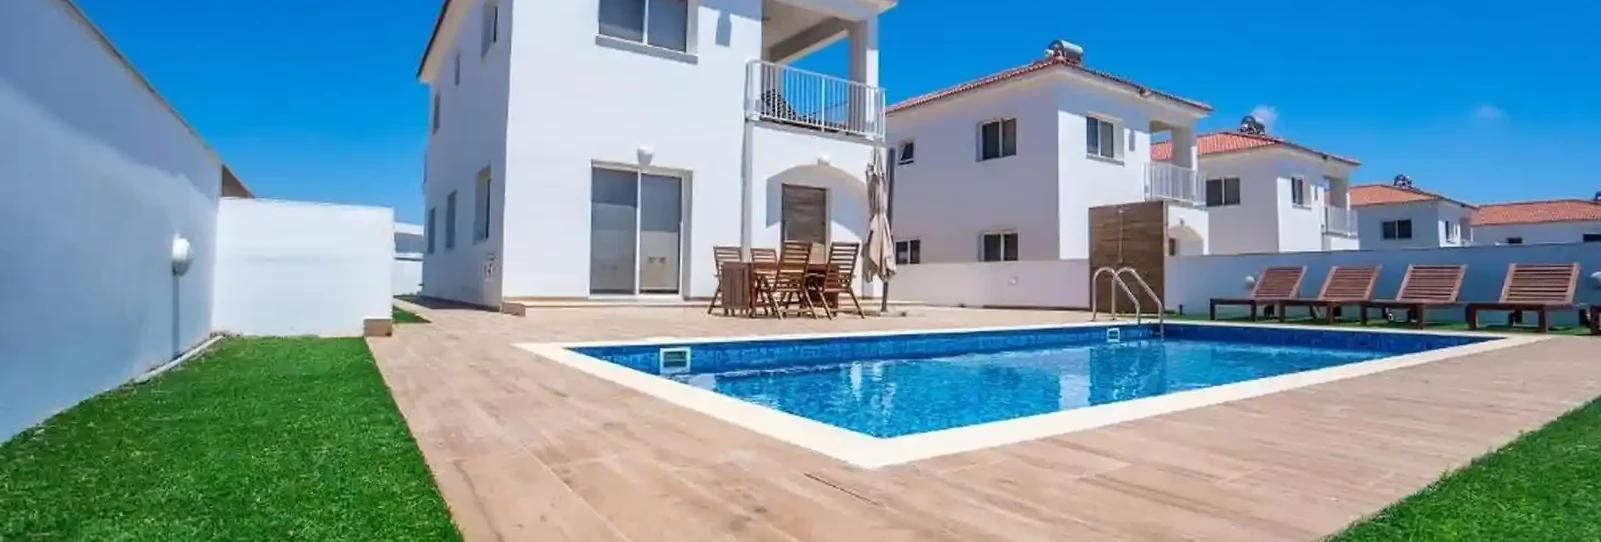 3-bedroom villa fоr sаle €500.000, image 1